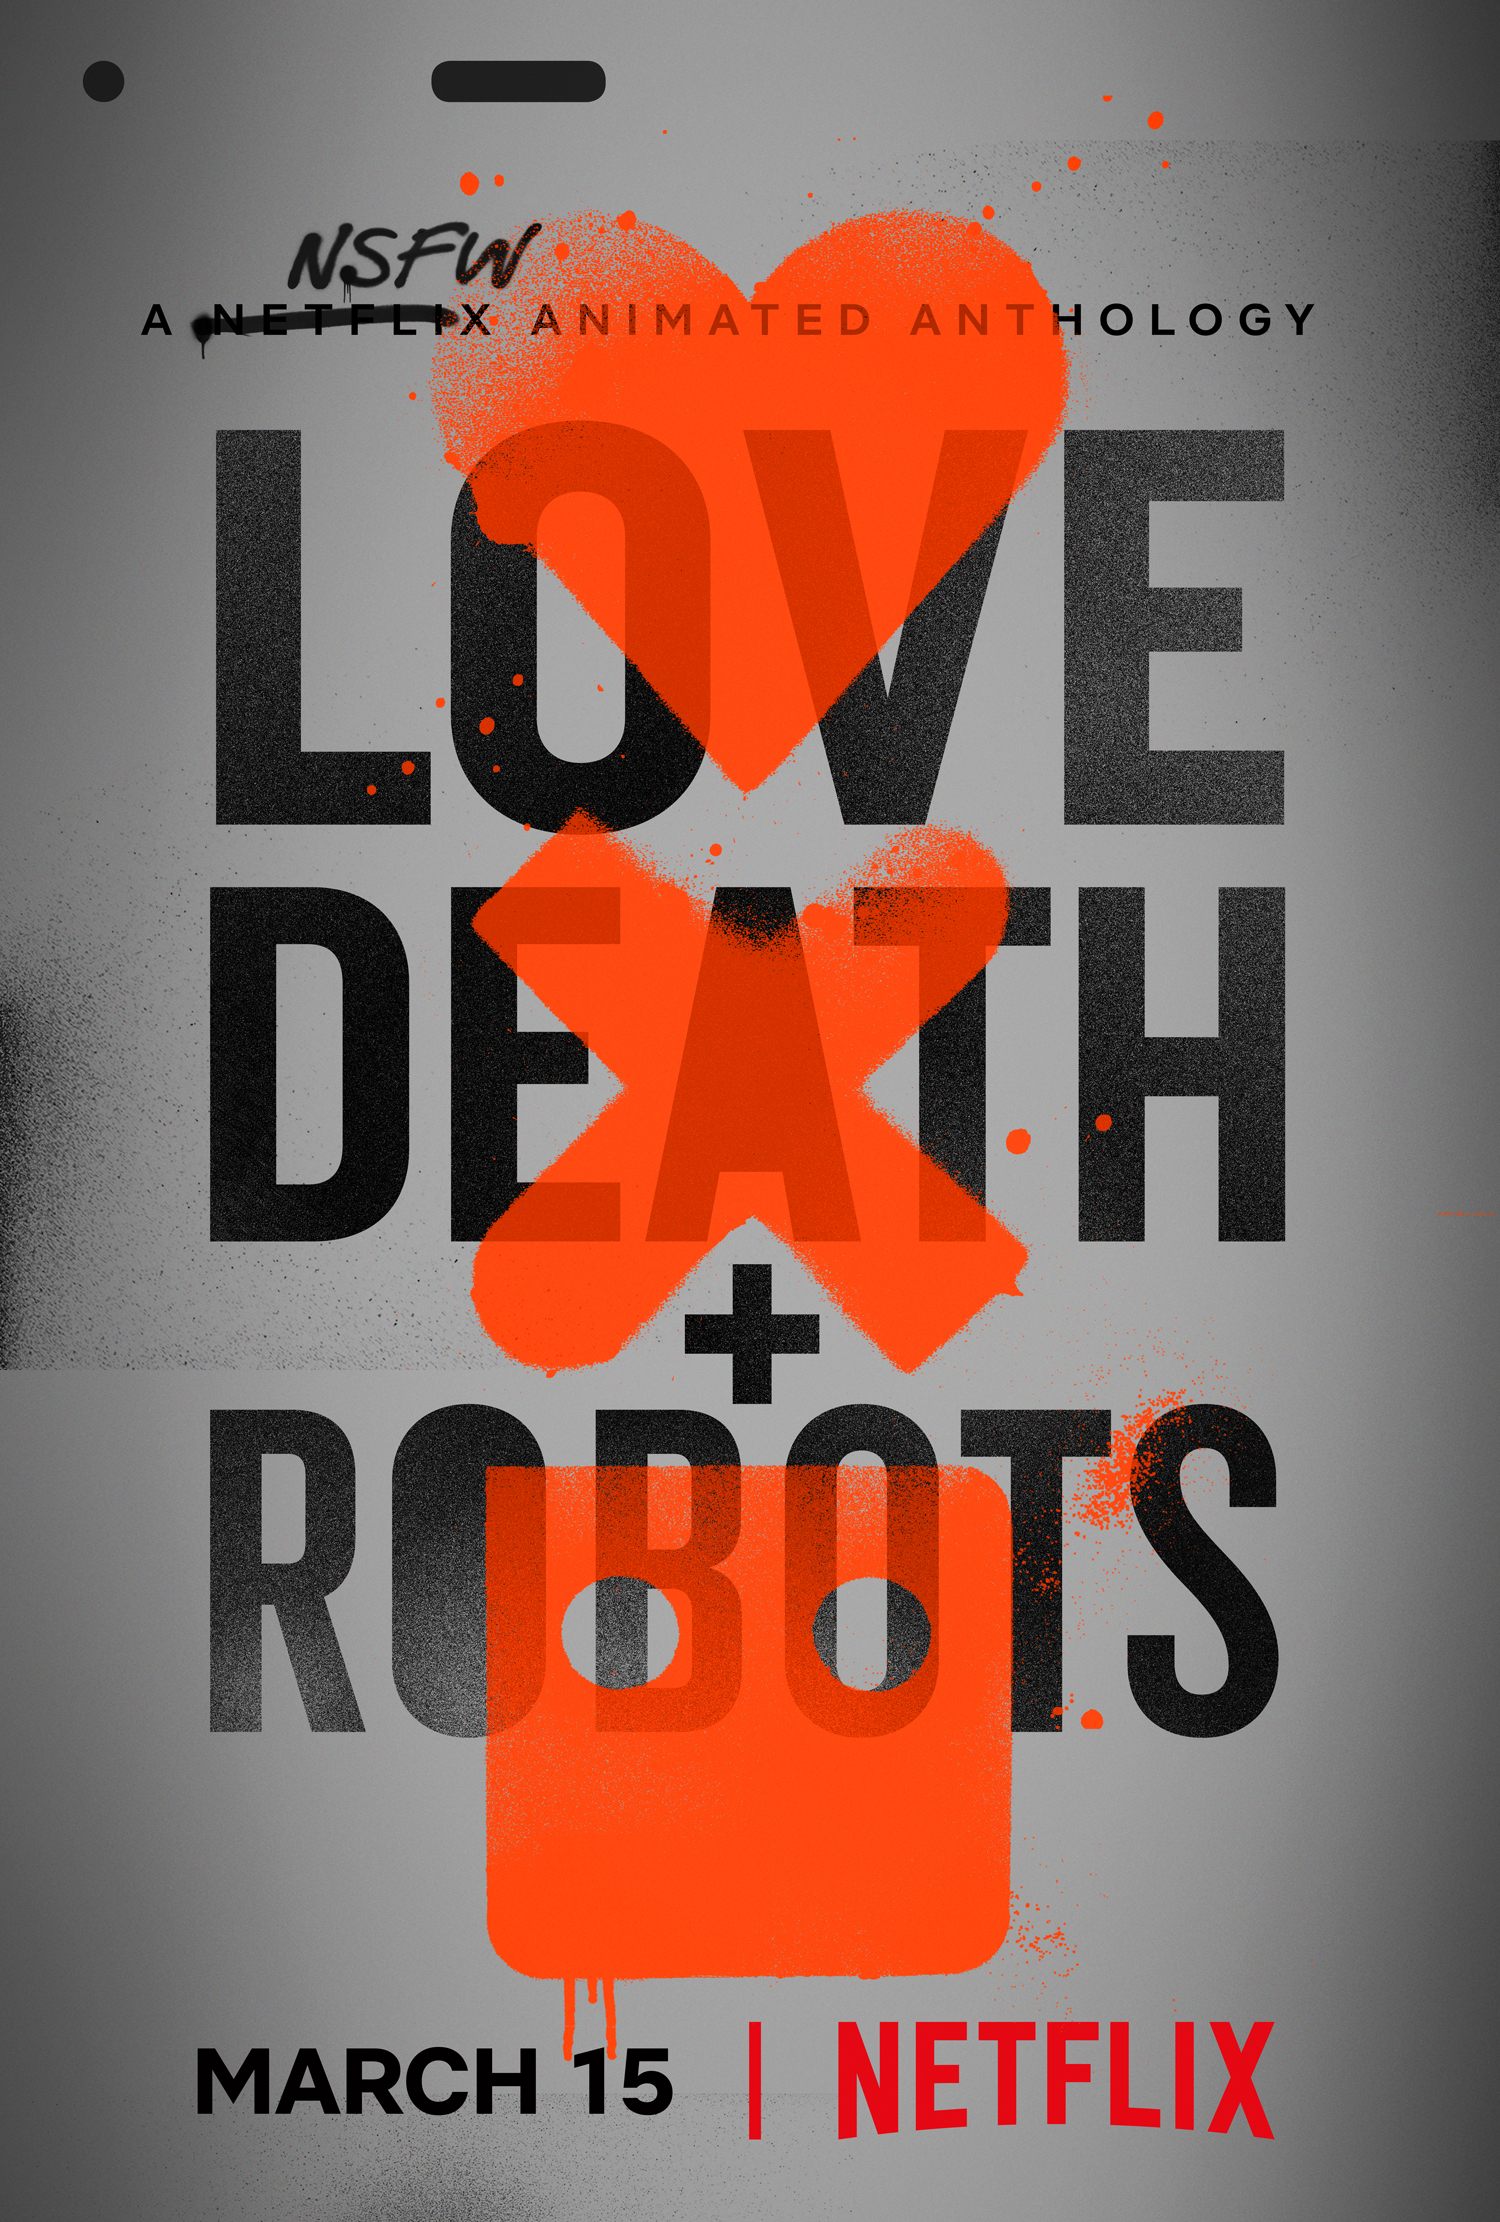 love-death-robots-poster